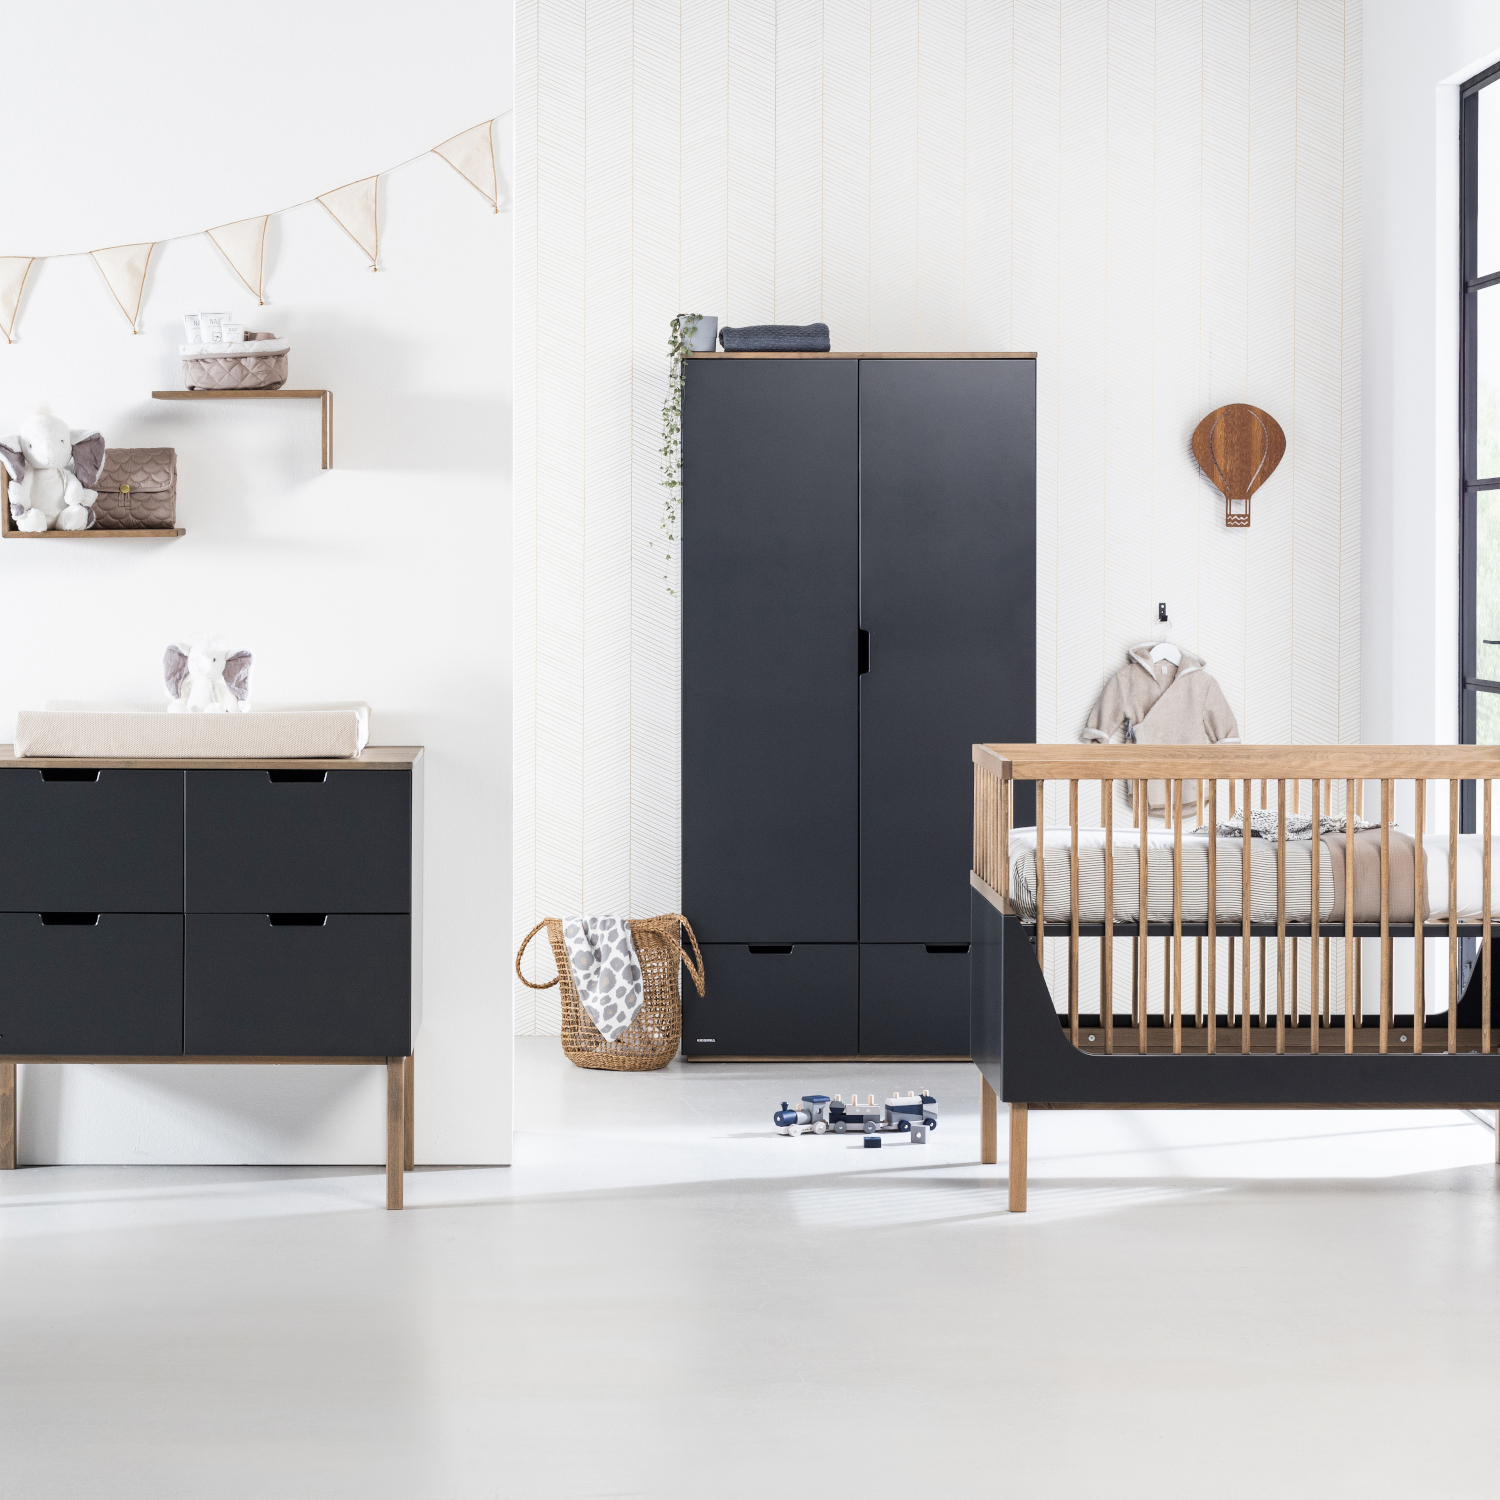 Kidsmill Sepp Babykamer Antraciet / Beuken | Bed 70 x 140 cm + Commode + Kast 2-Deurs